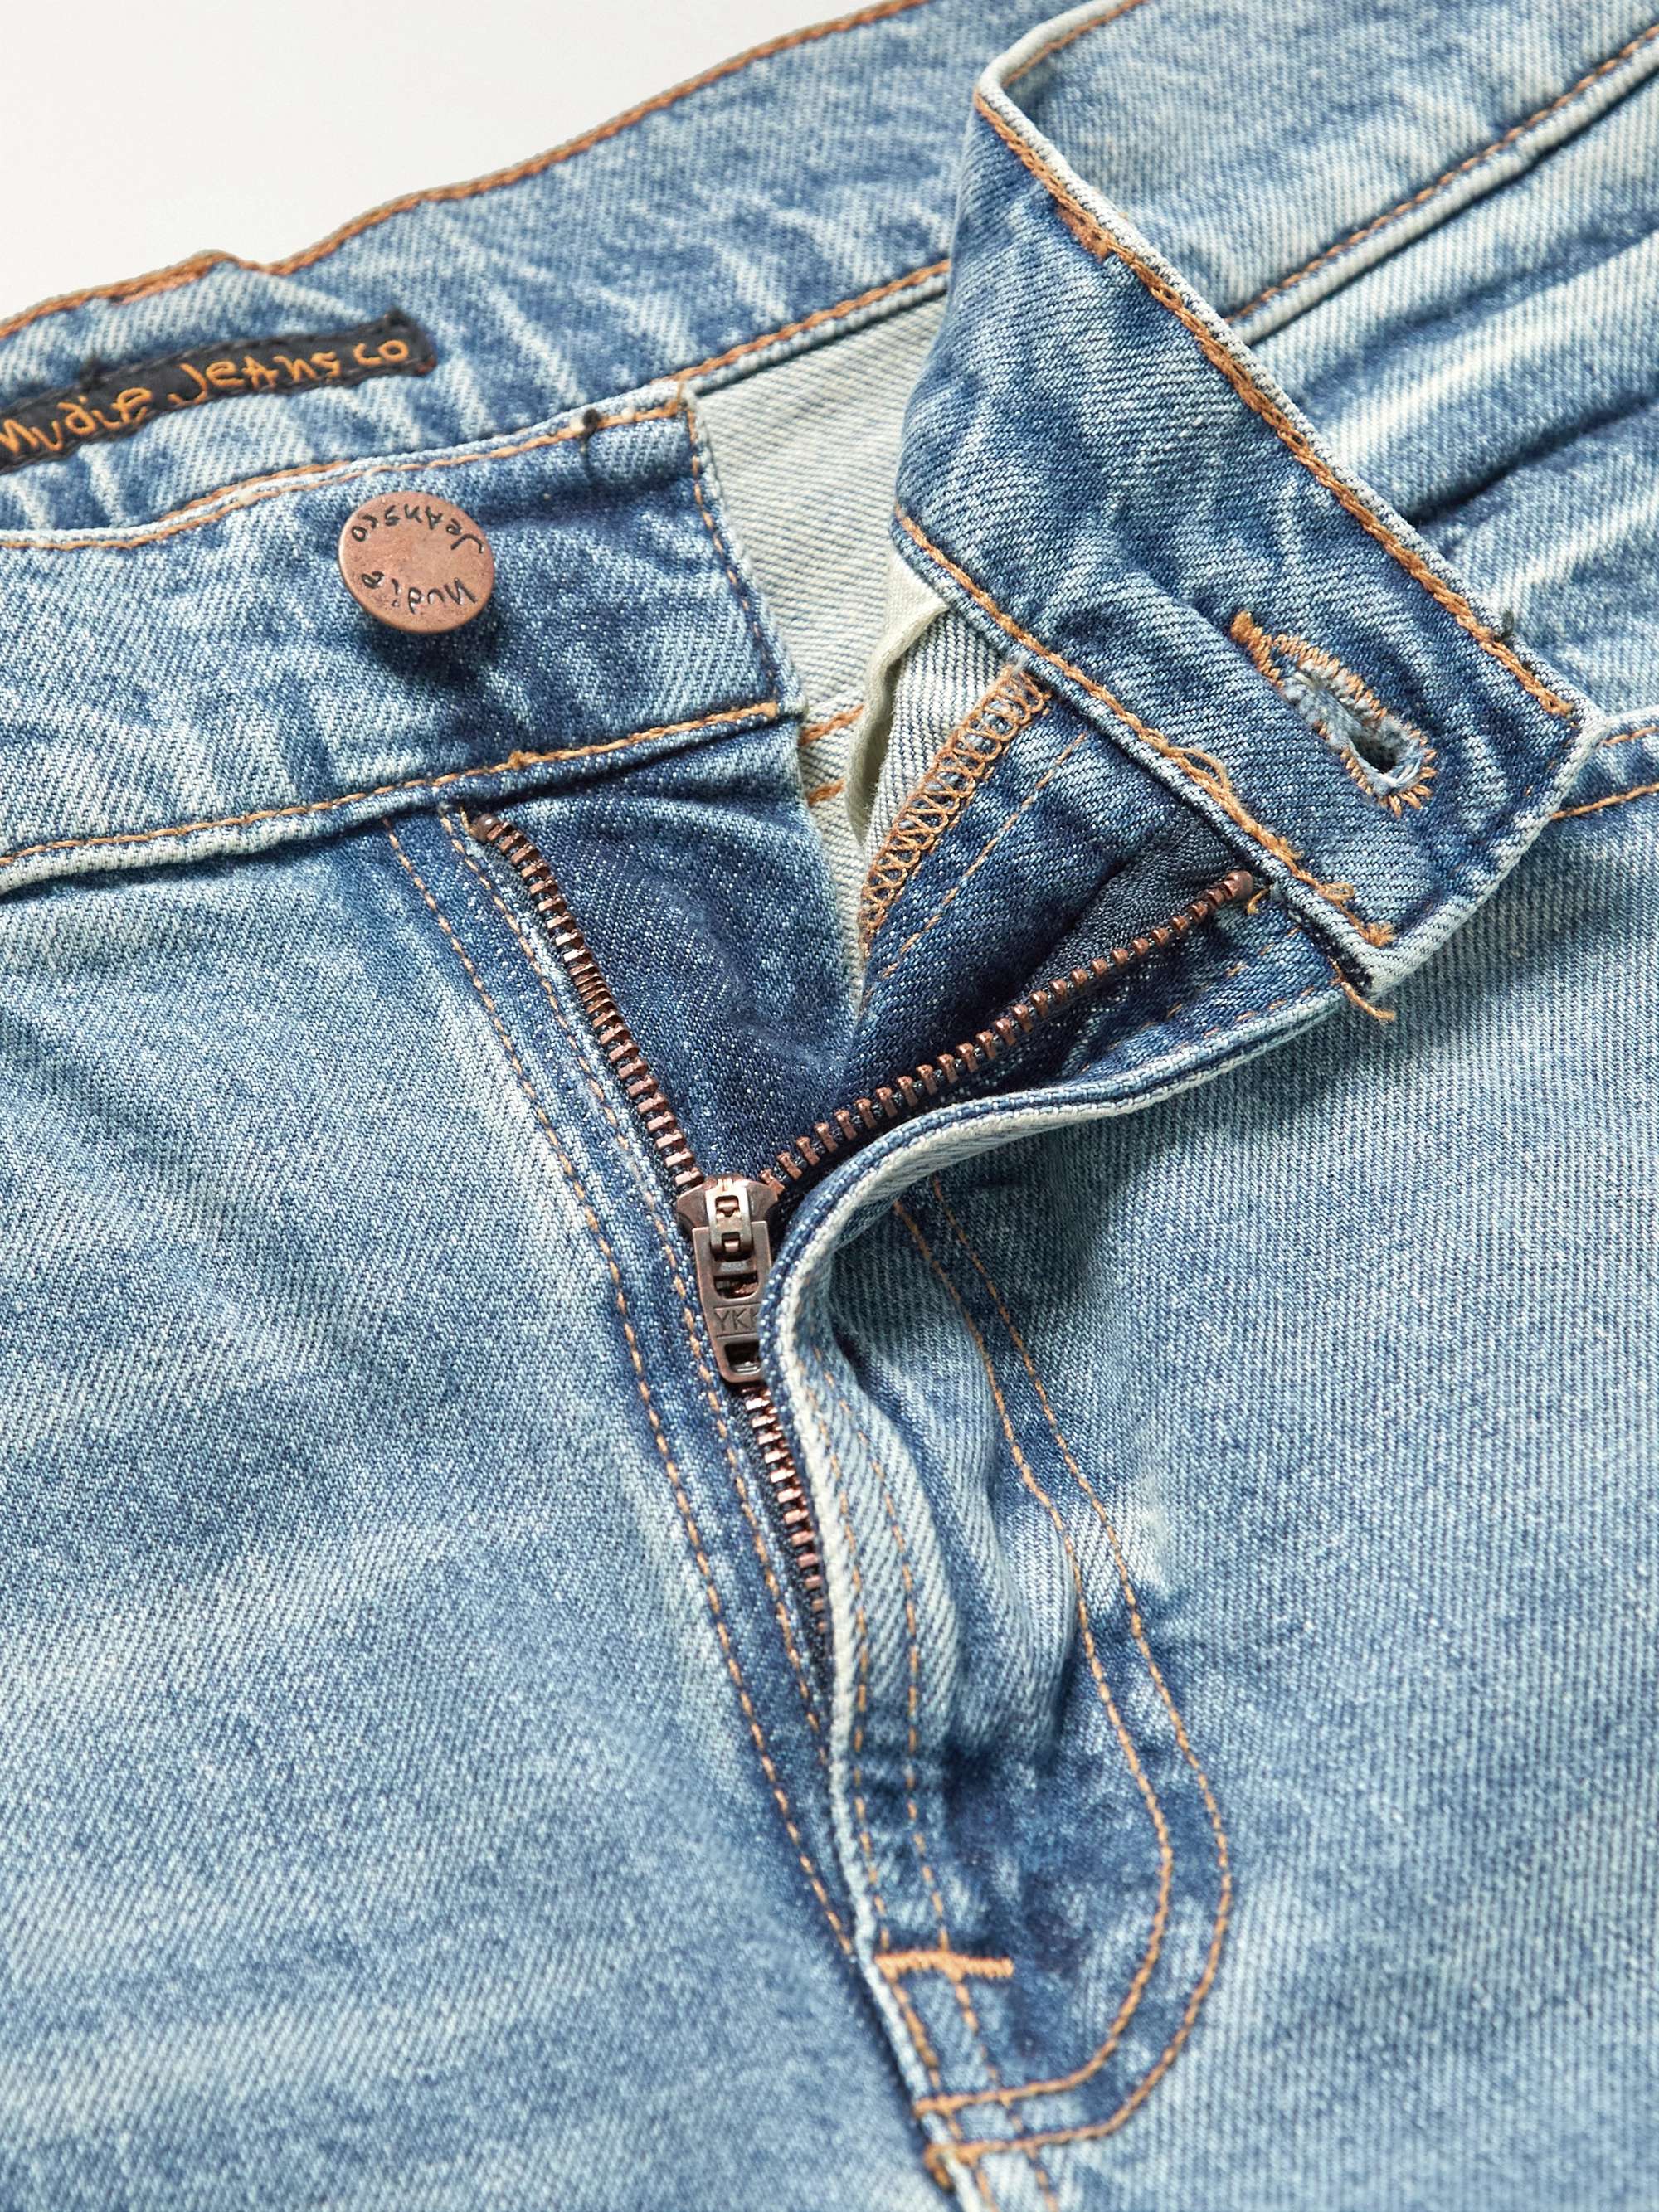 NUDIE JEANS Lean Dean Slim-Fit Tapered Organic Stretch-Denim Jeans